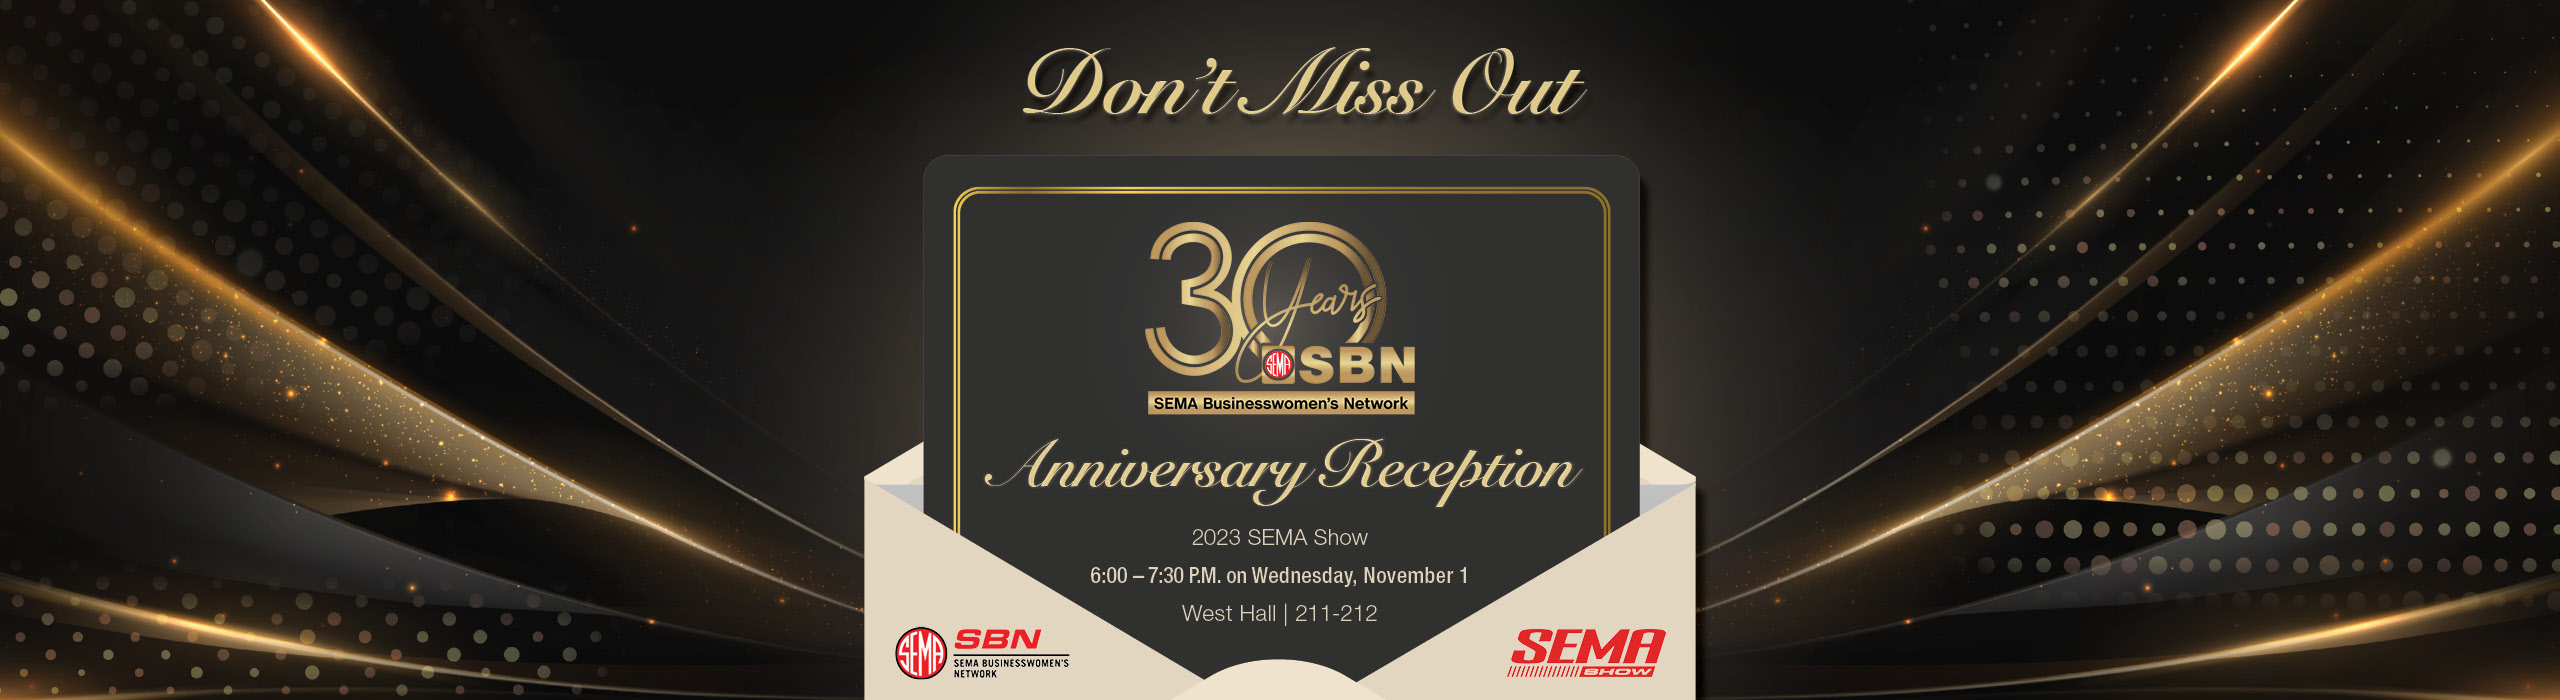 SBN 30th Reception